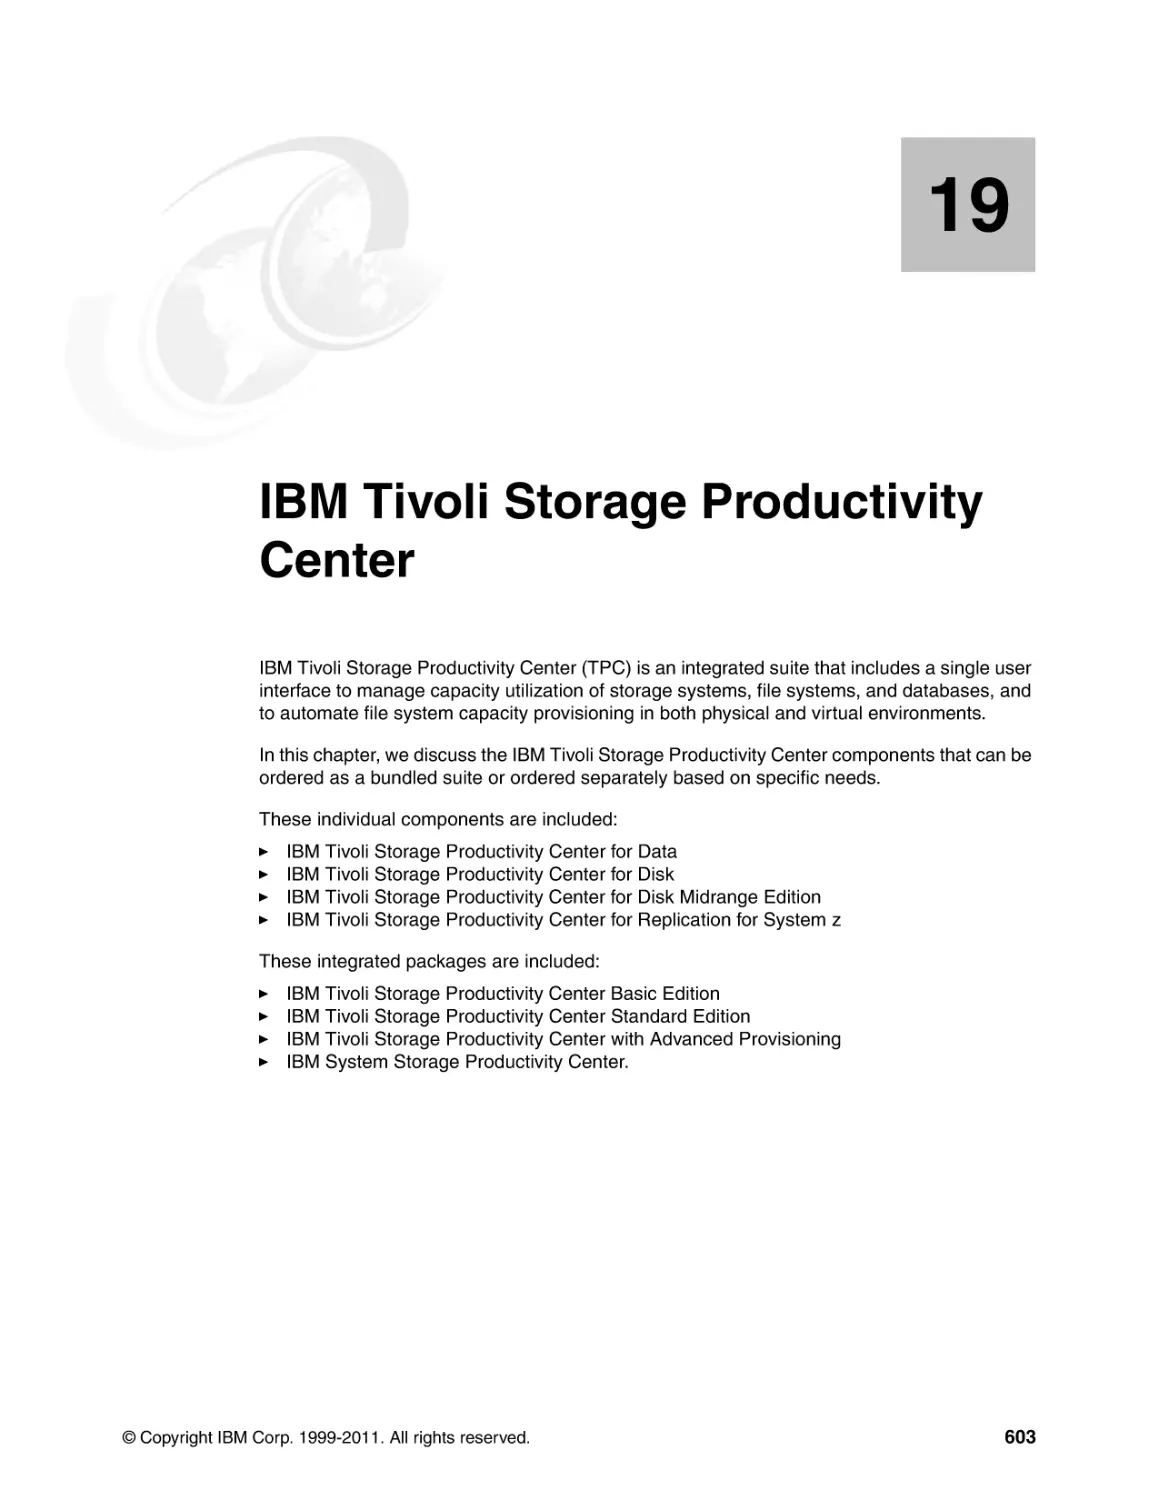 Chapter 19. IBM Tivoli Storage Productivity Center